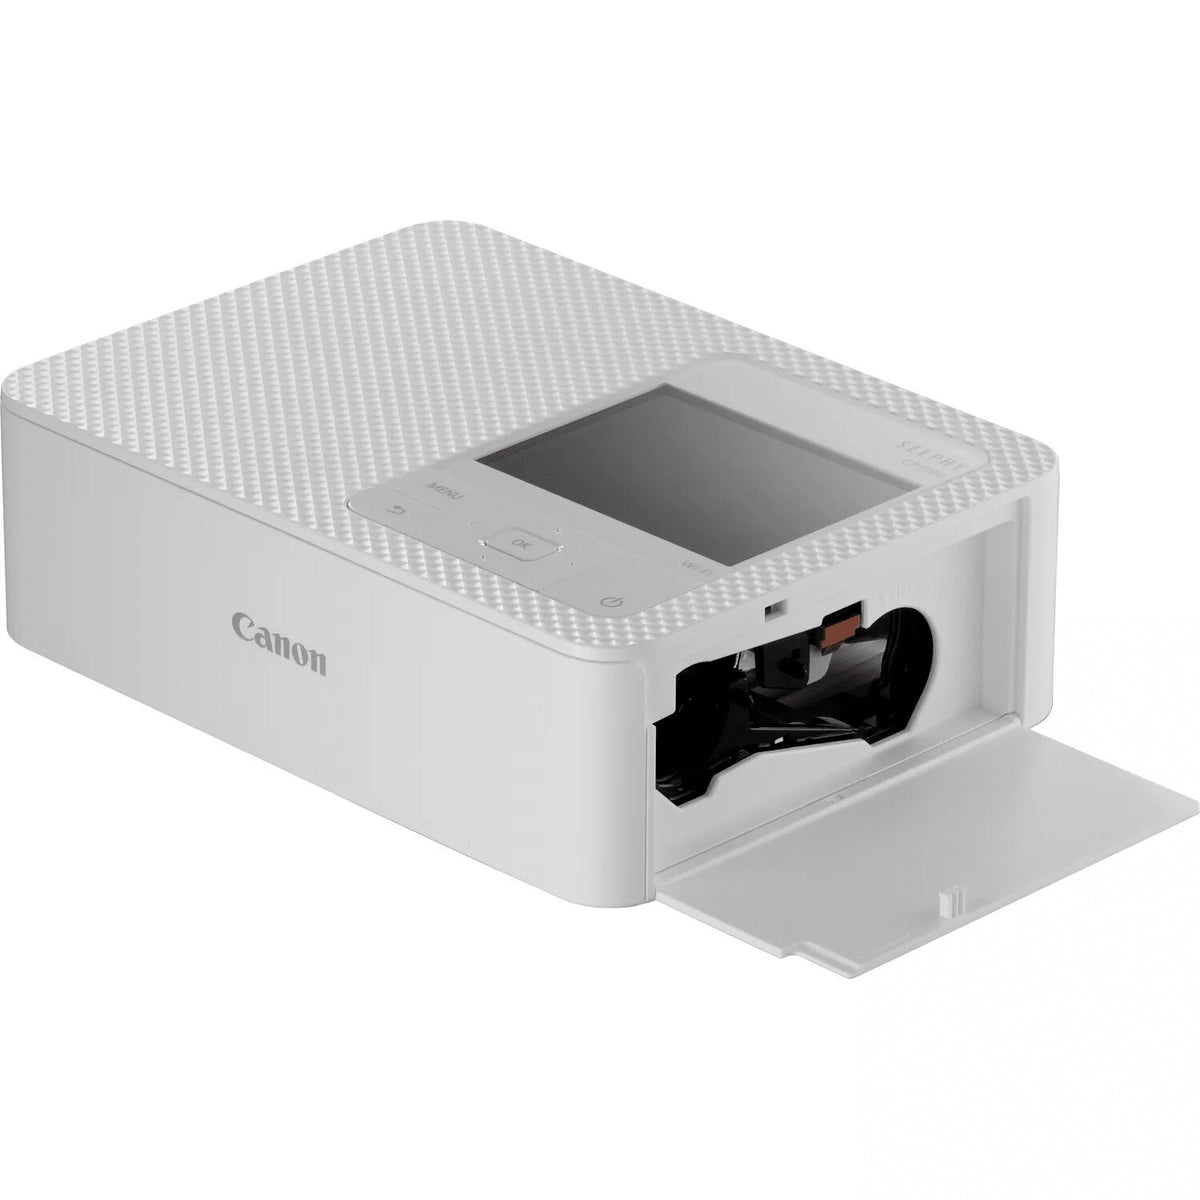 Canon SELPHY CP1500 - Wi-Fi Photo Printer in White